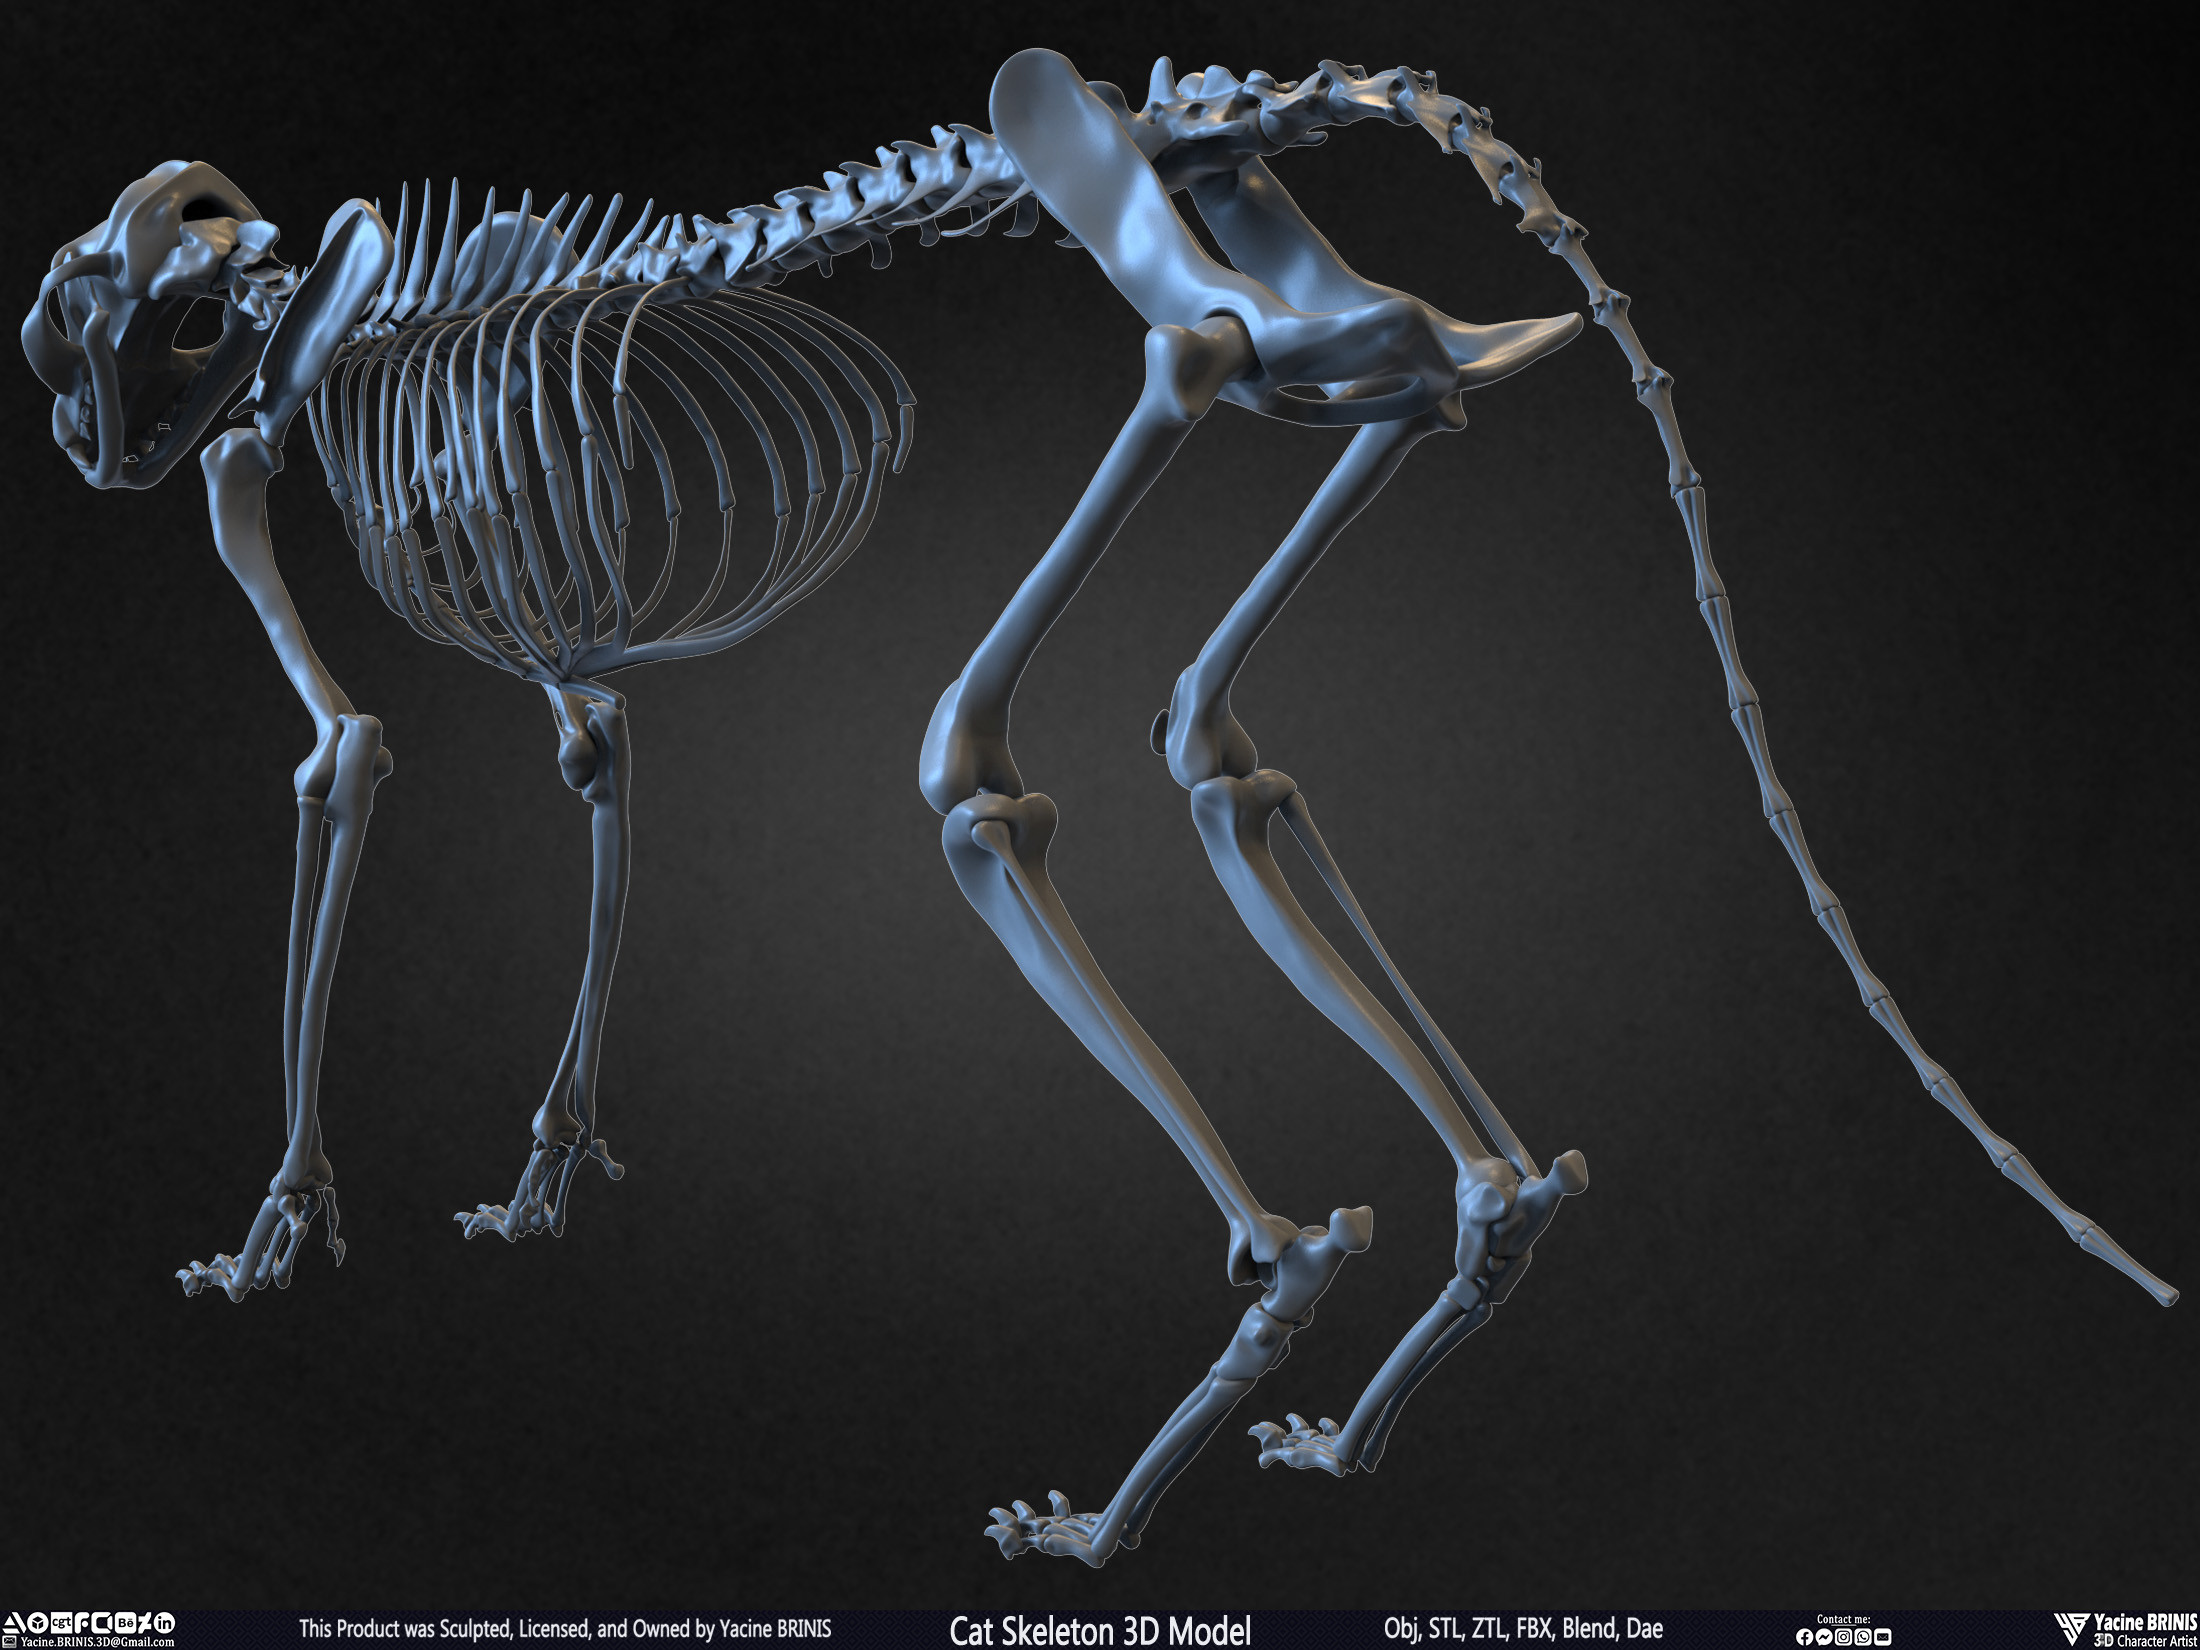 Highly Detailed Cat Skeleton 3D Model Sculpted by Yacine BRINIS Set 015